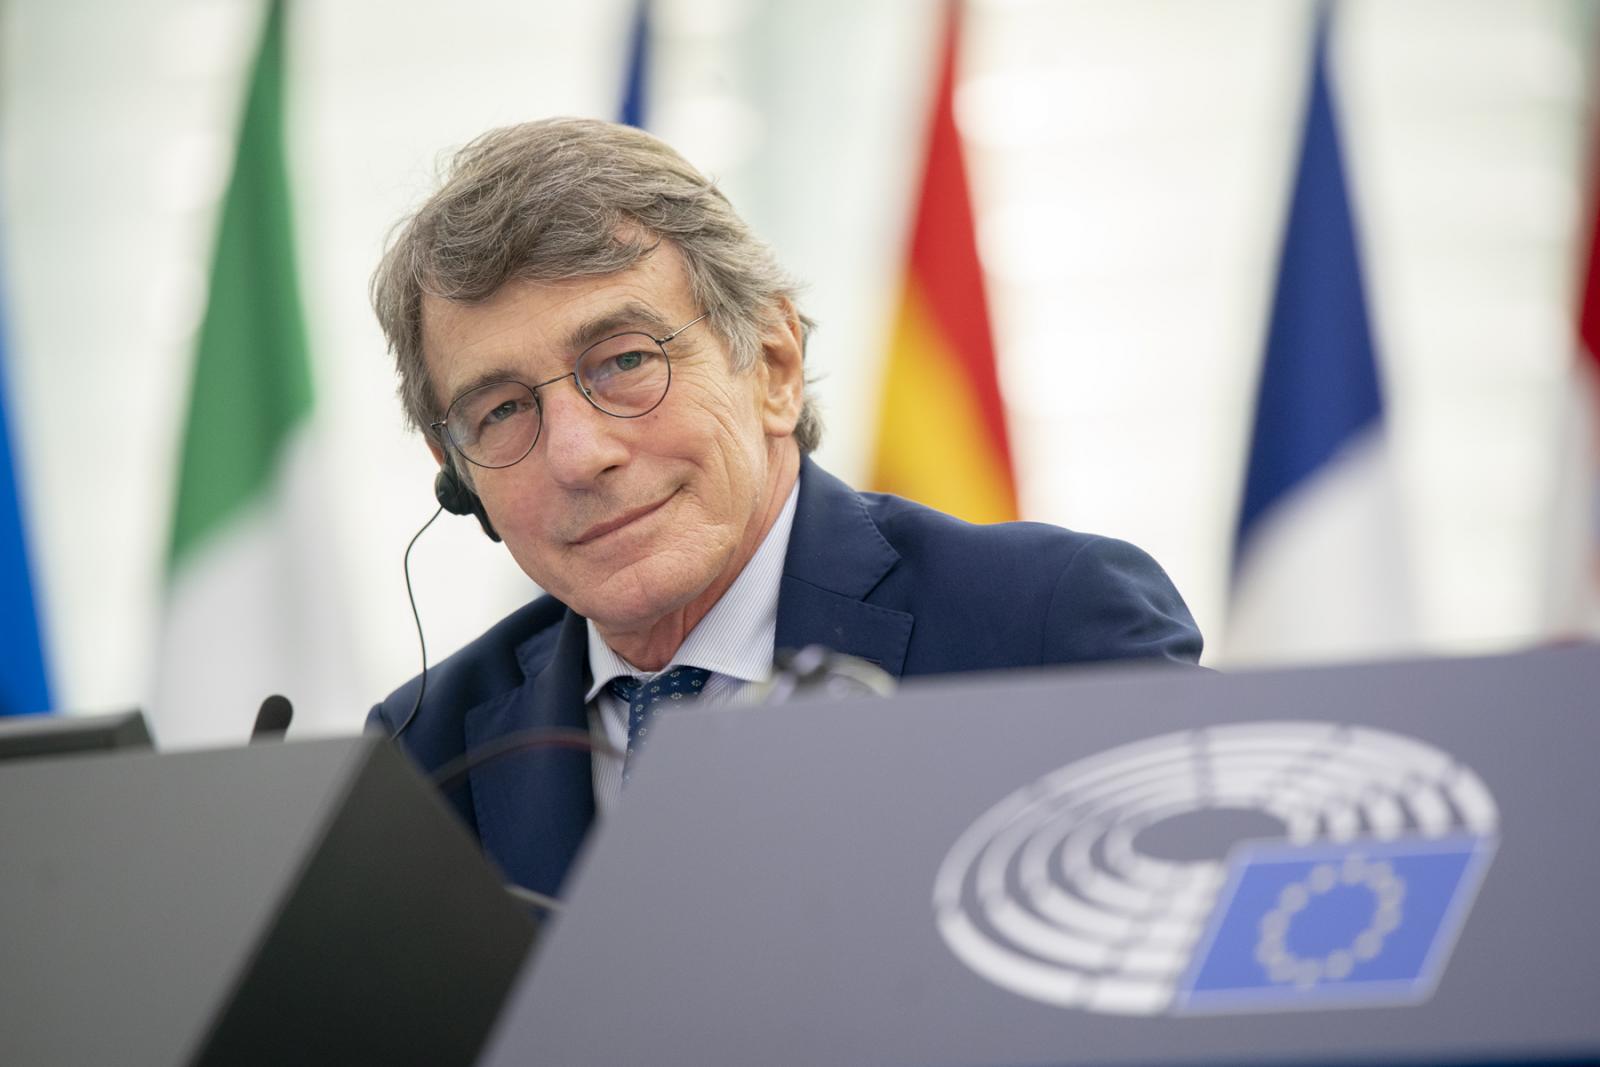 Passing away of EP President Sassoli